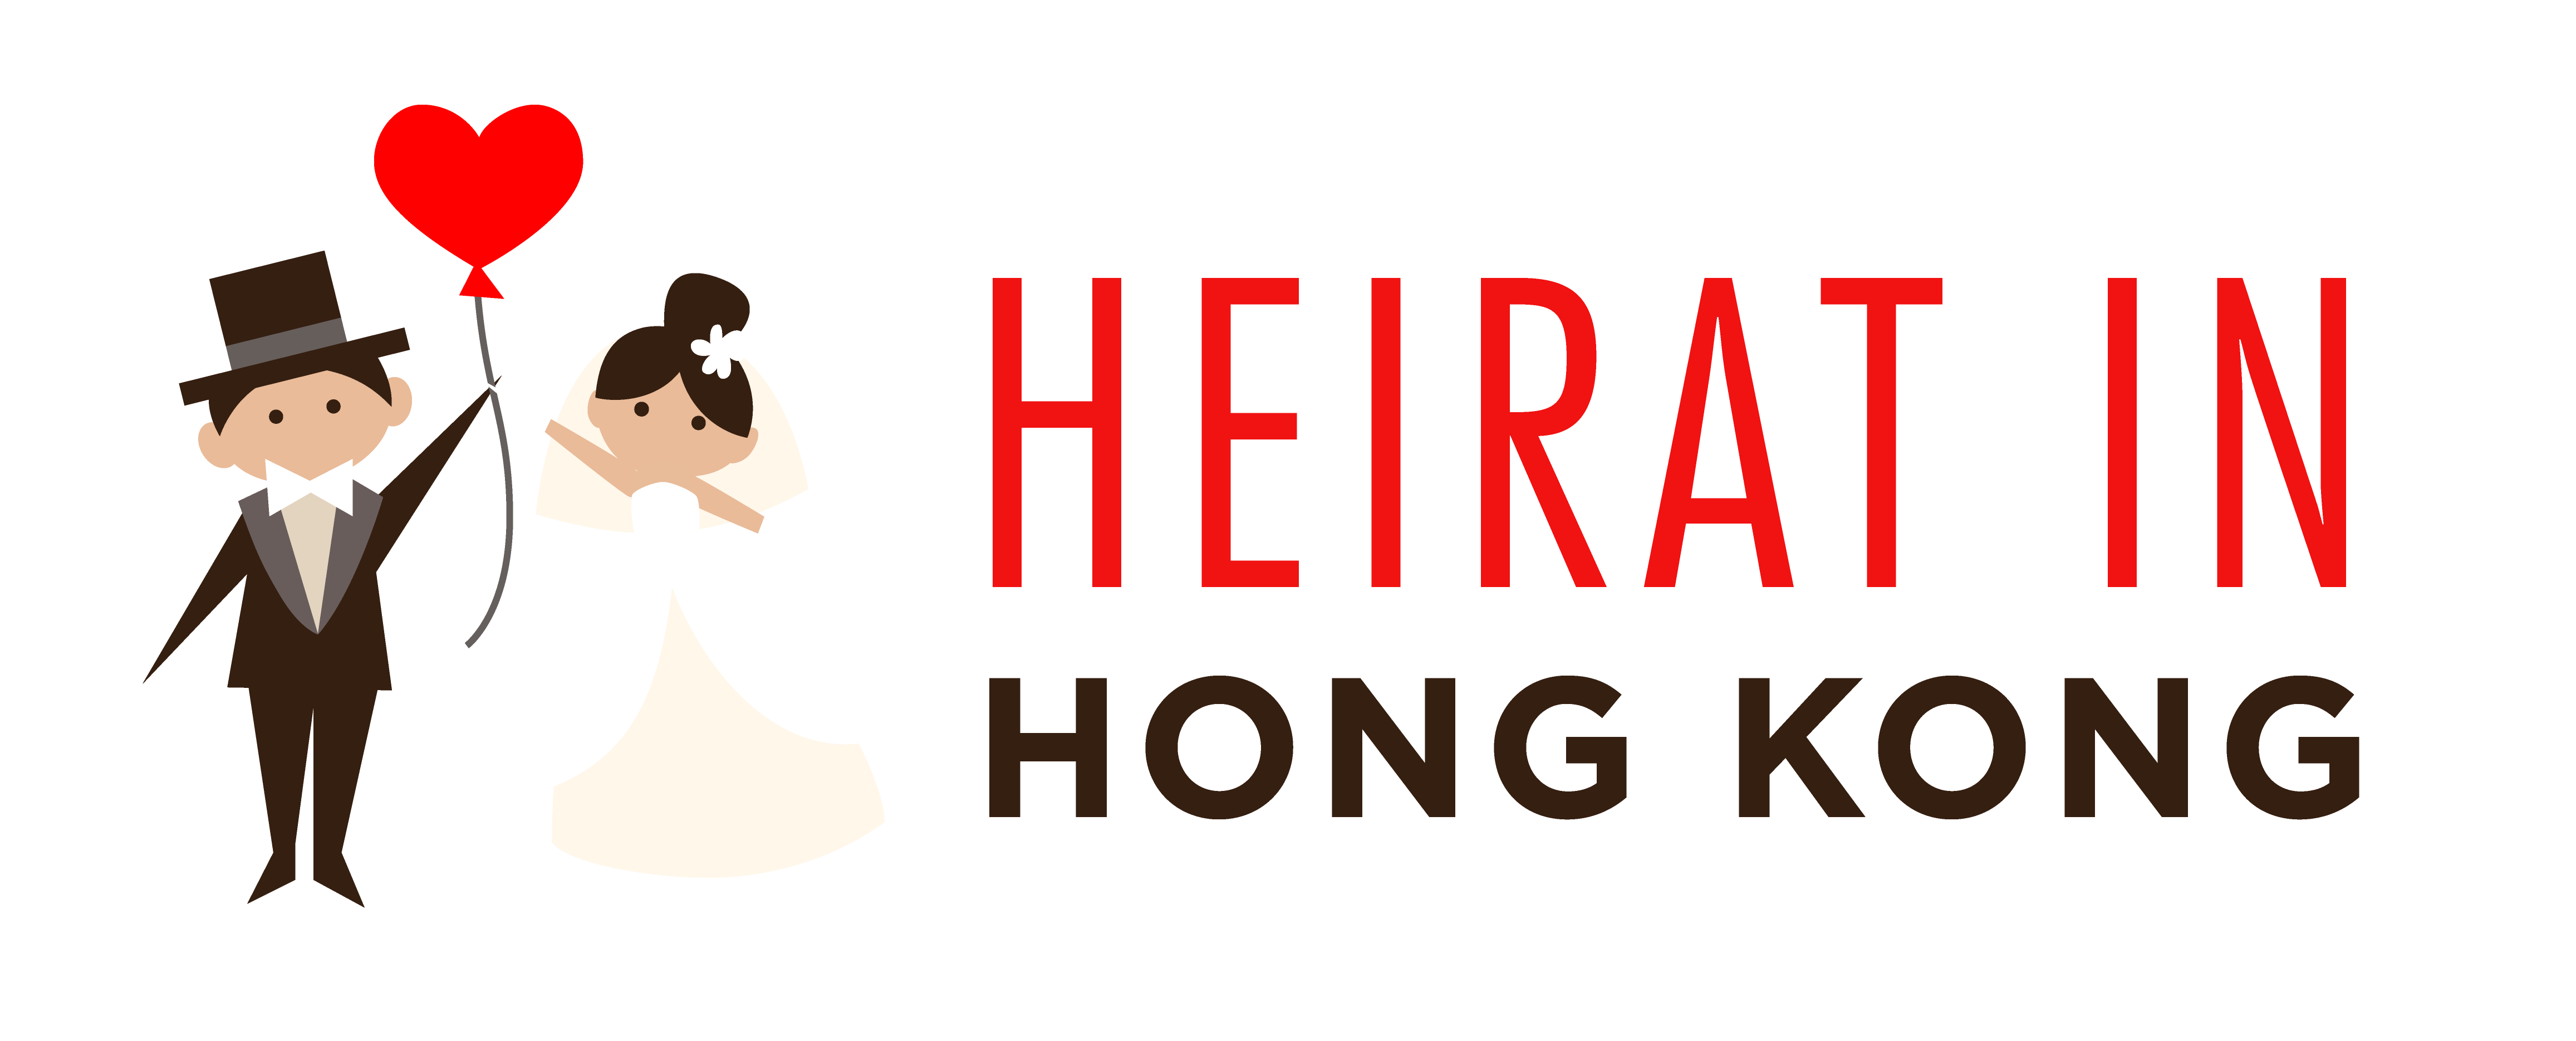 Heirat in Hongkong logo - Aktiv werden